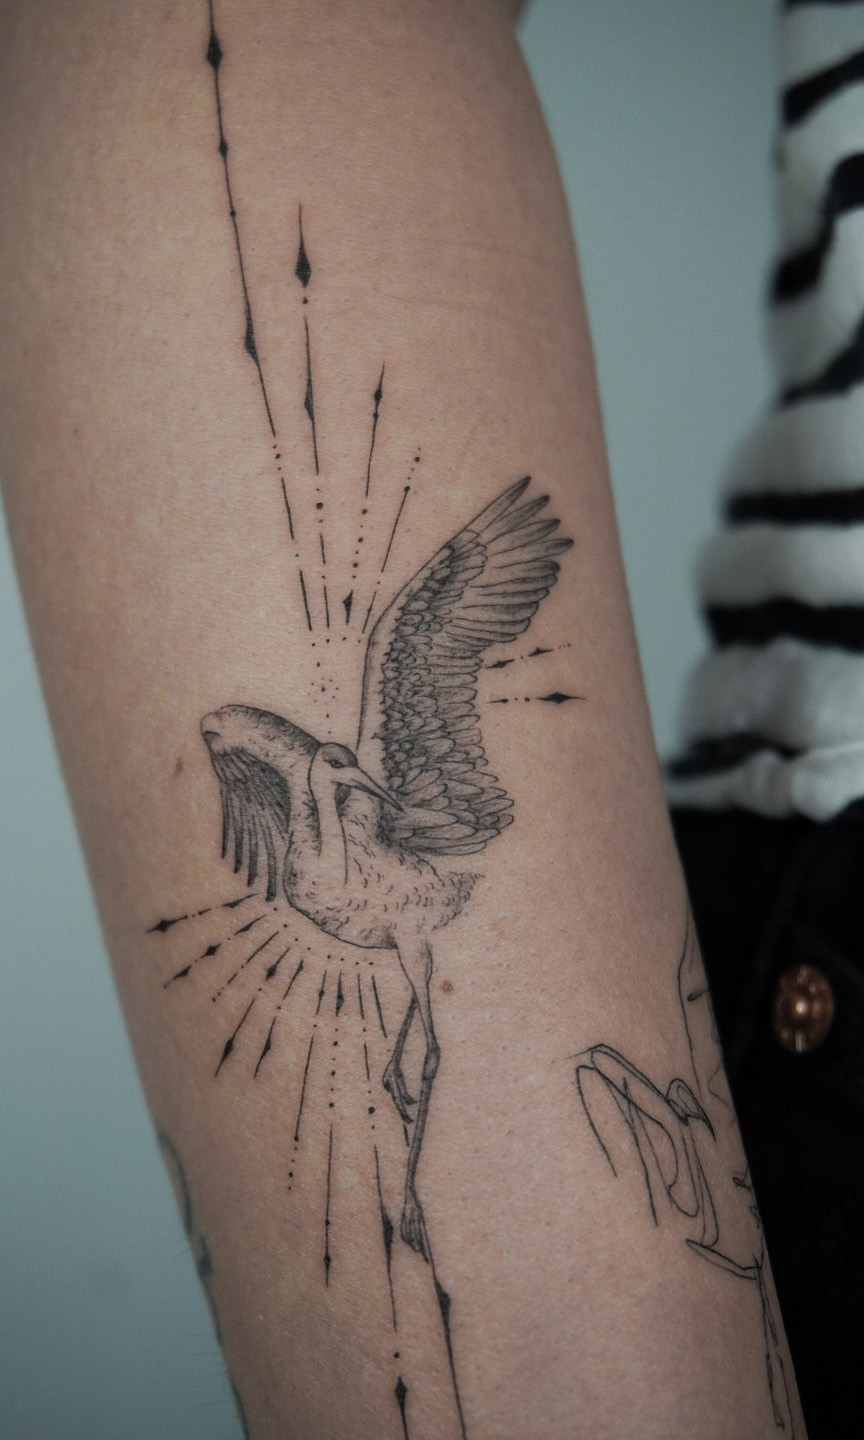 fineline flower tattoo on forearm with bird from smasli ink an female tattoo artist working in salzburg austria